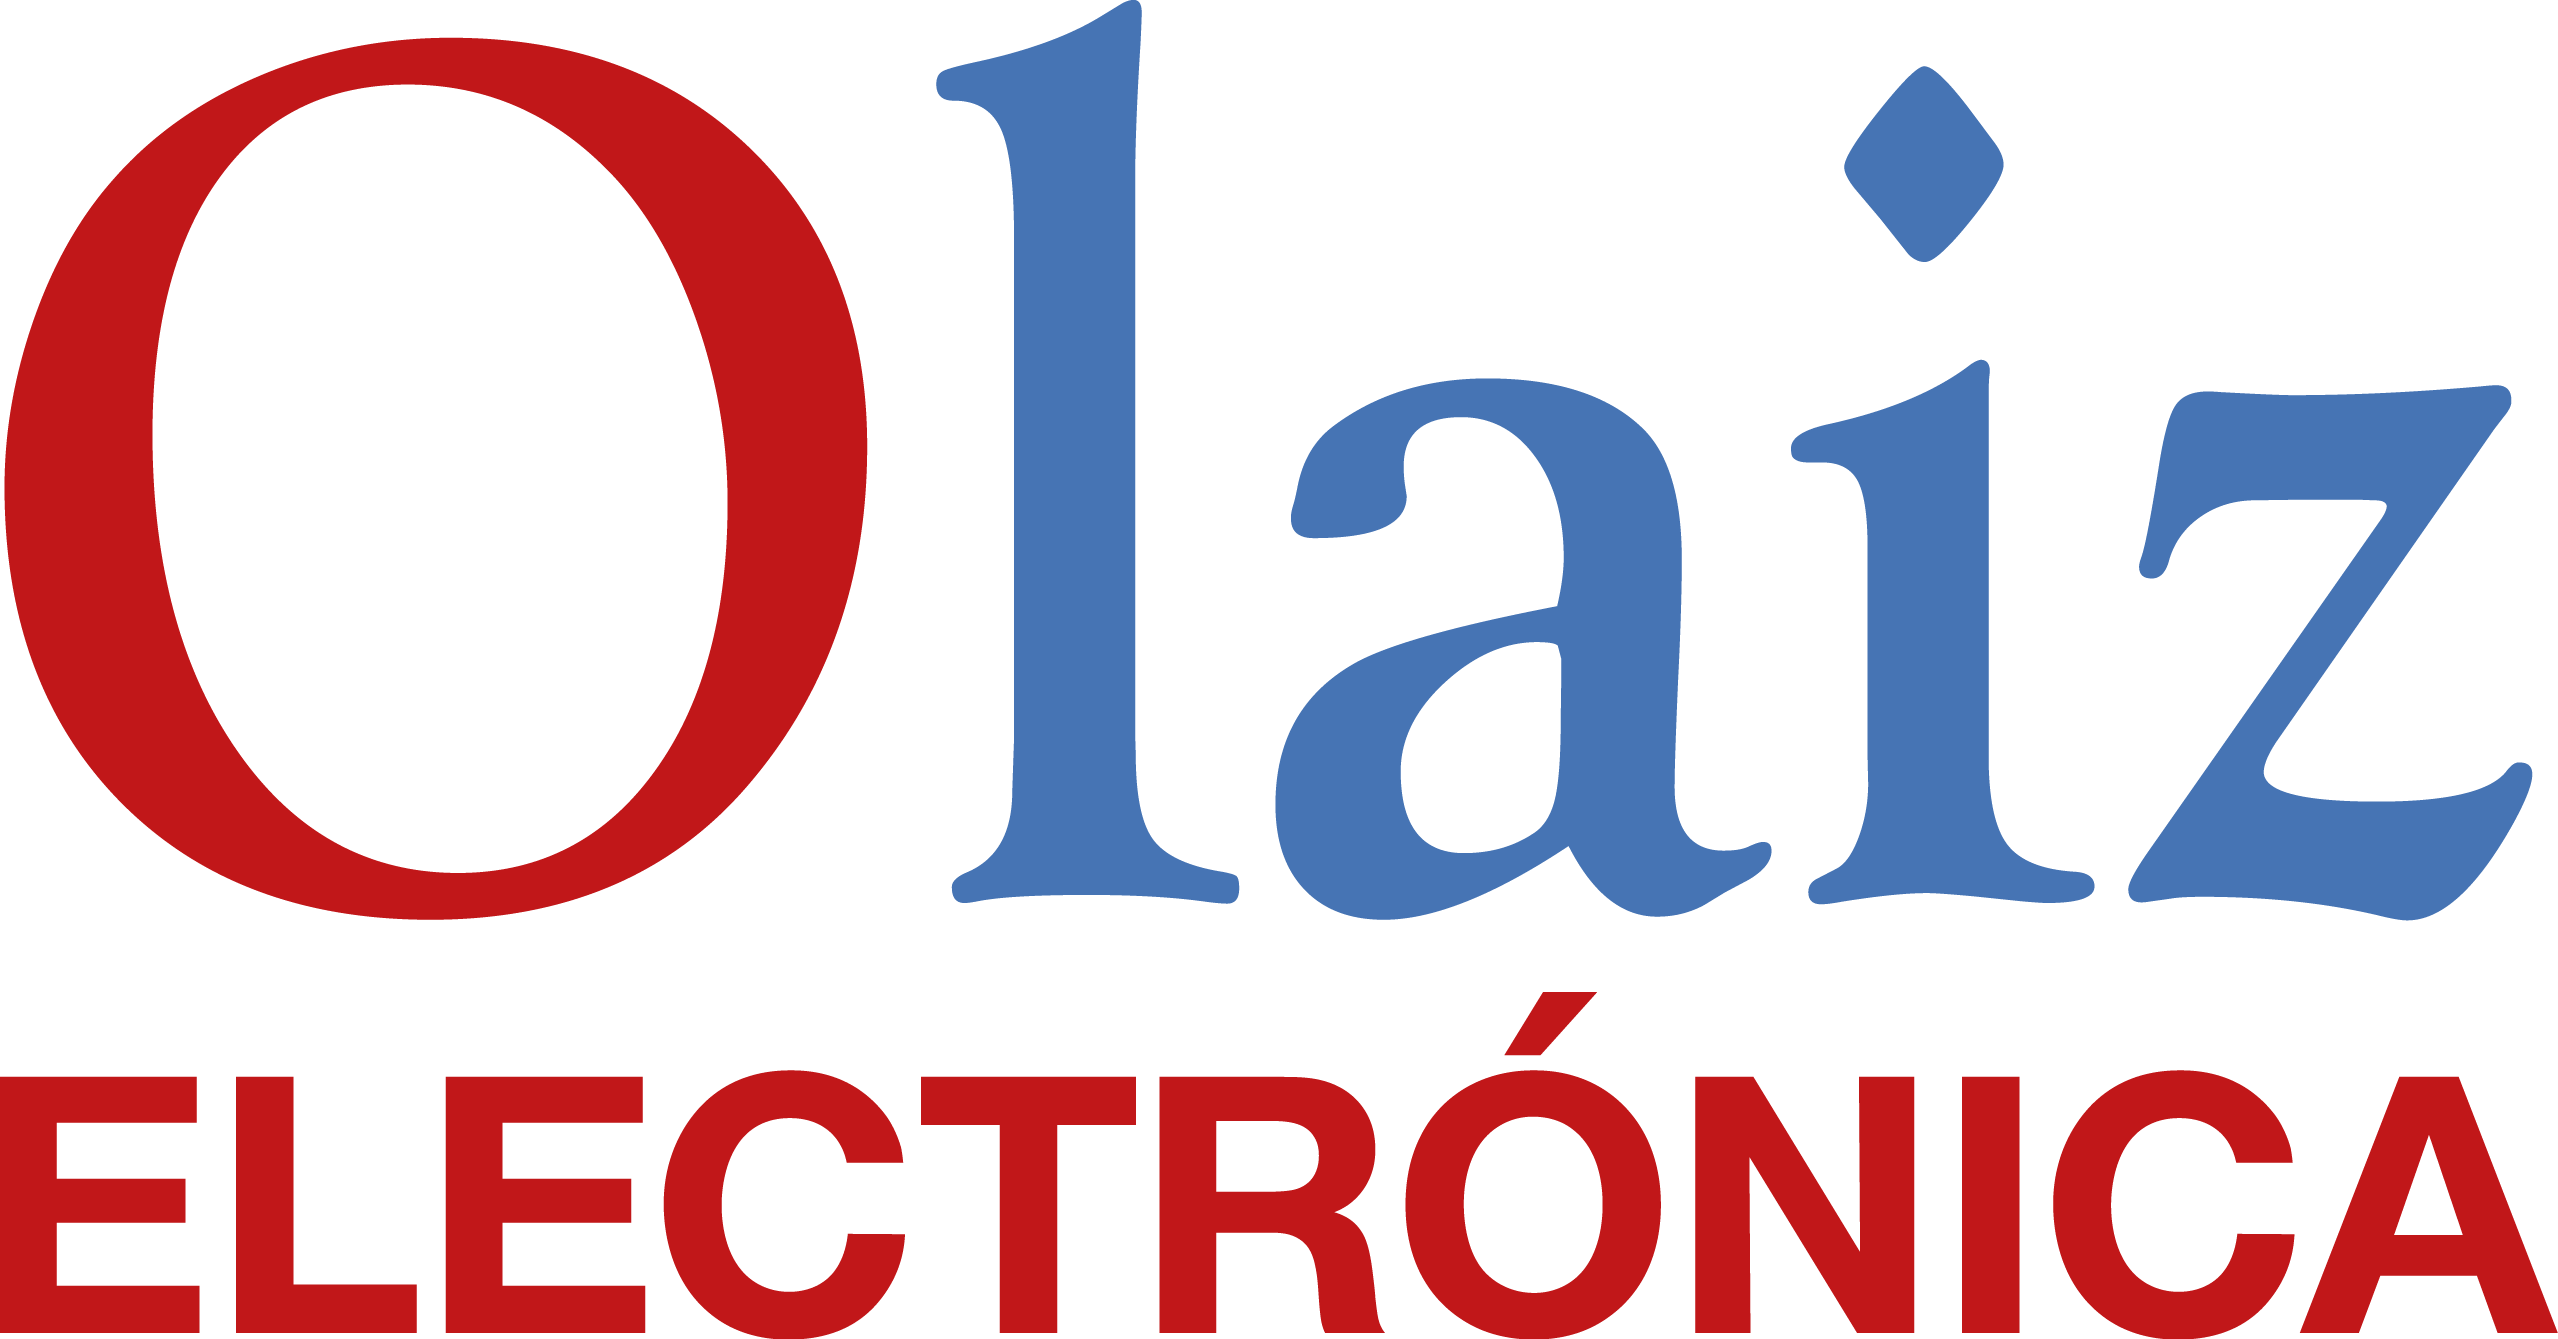 Electronica Olaiz SL logo